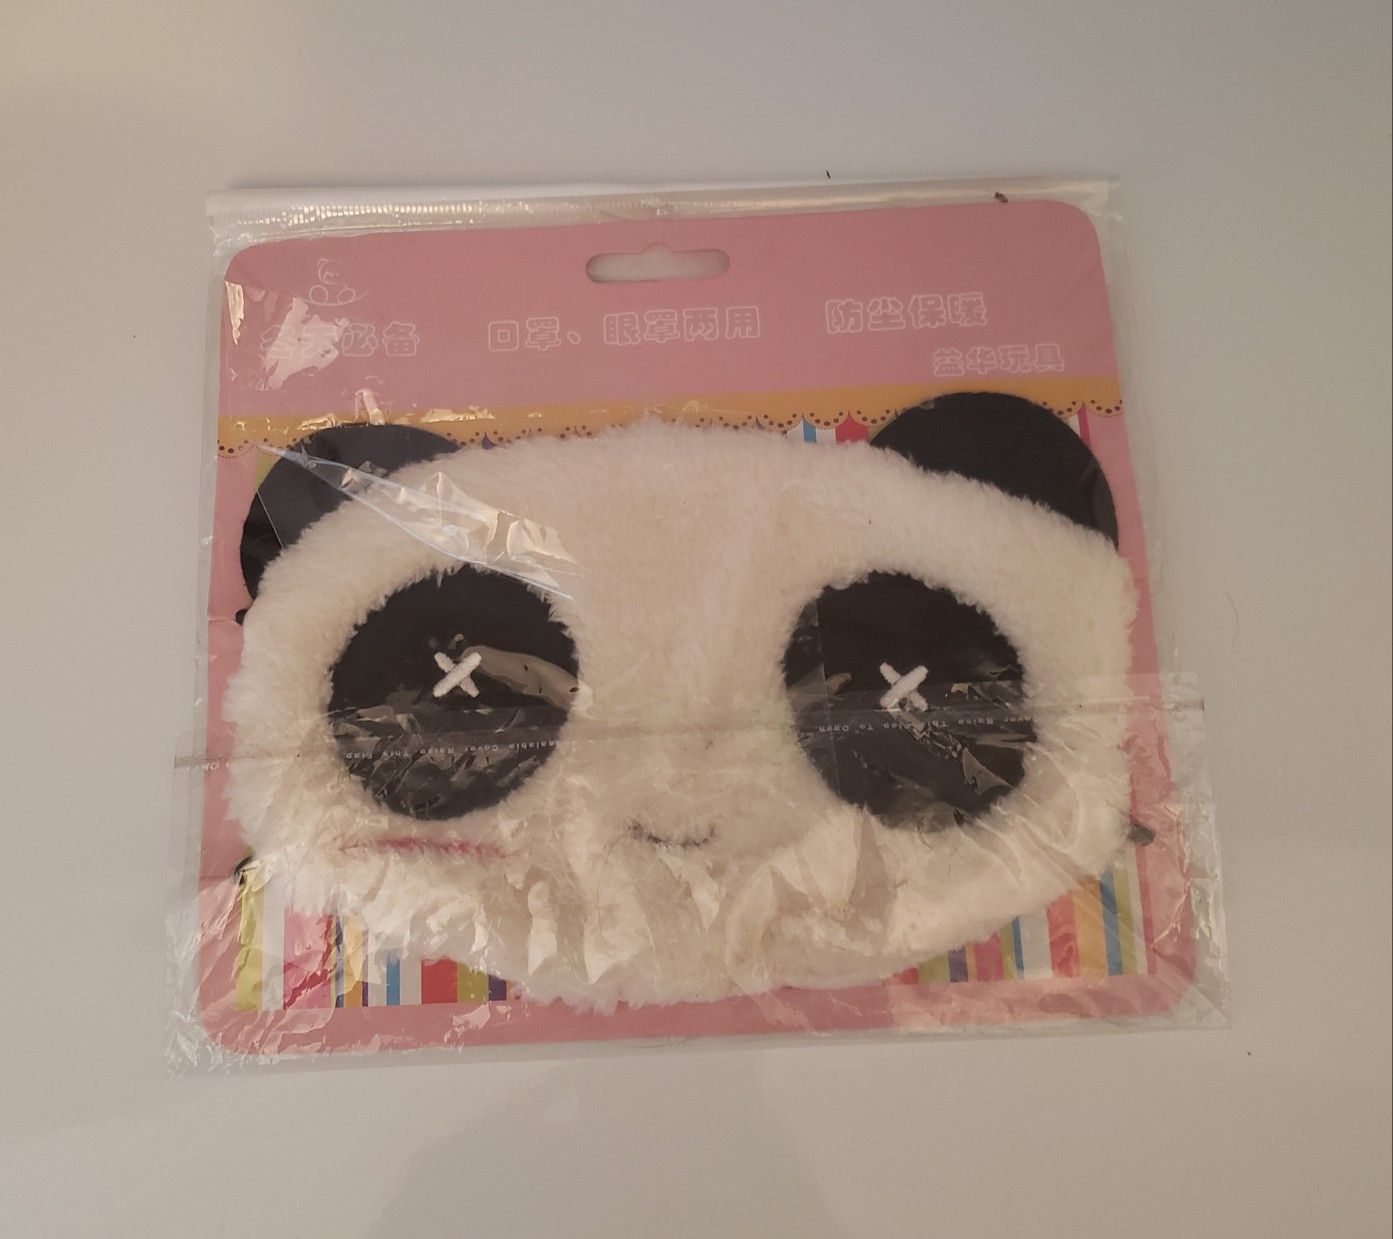 Panda face mask